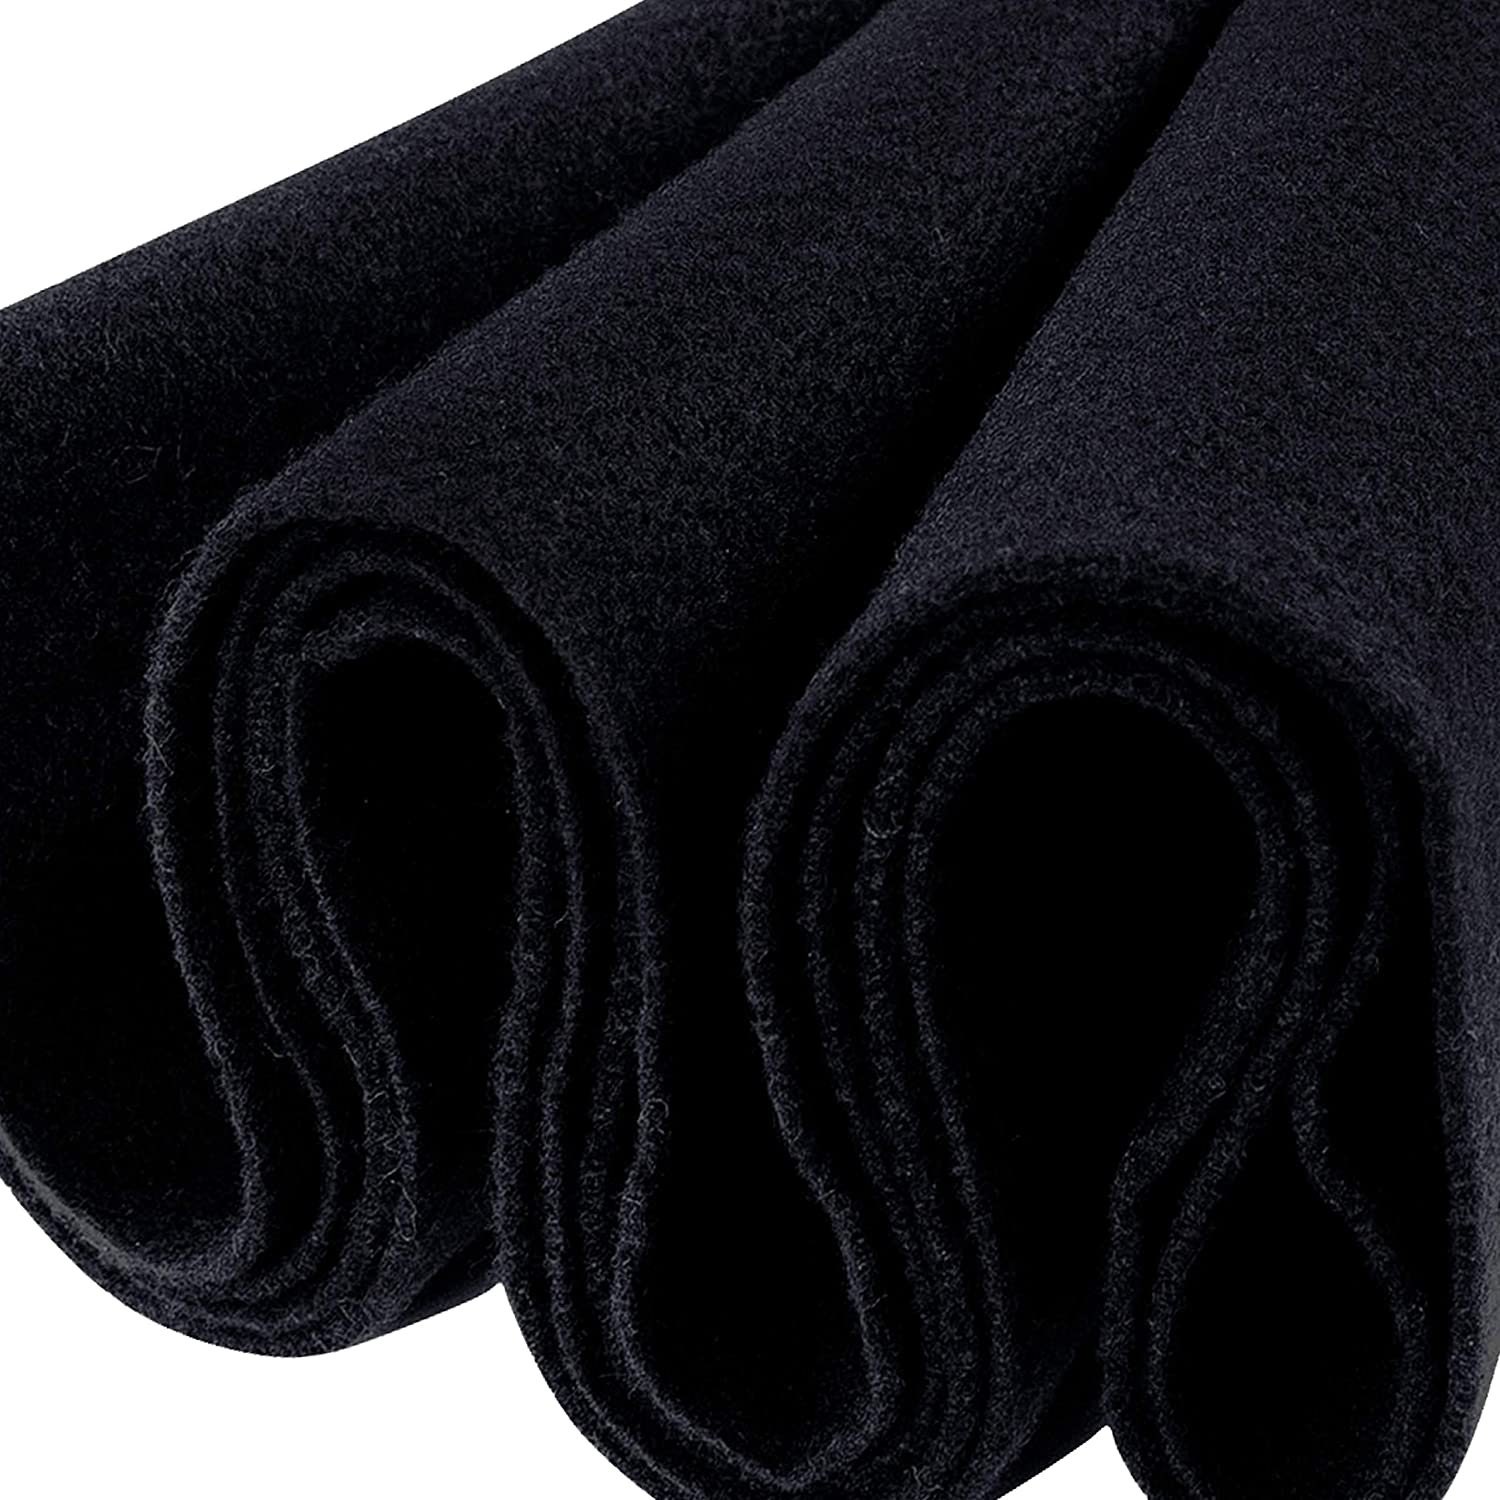 Buy Black Acrylic Wholesale Felt Fabric 1.6mm Thick